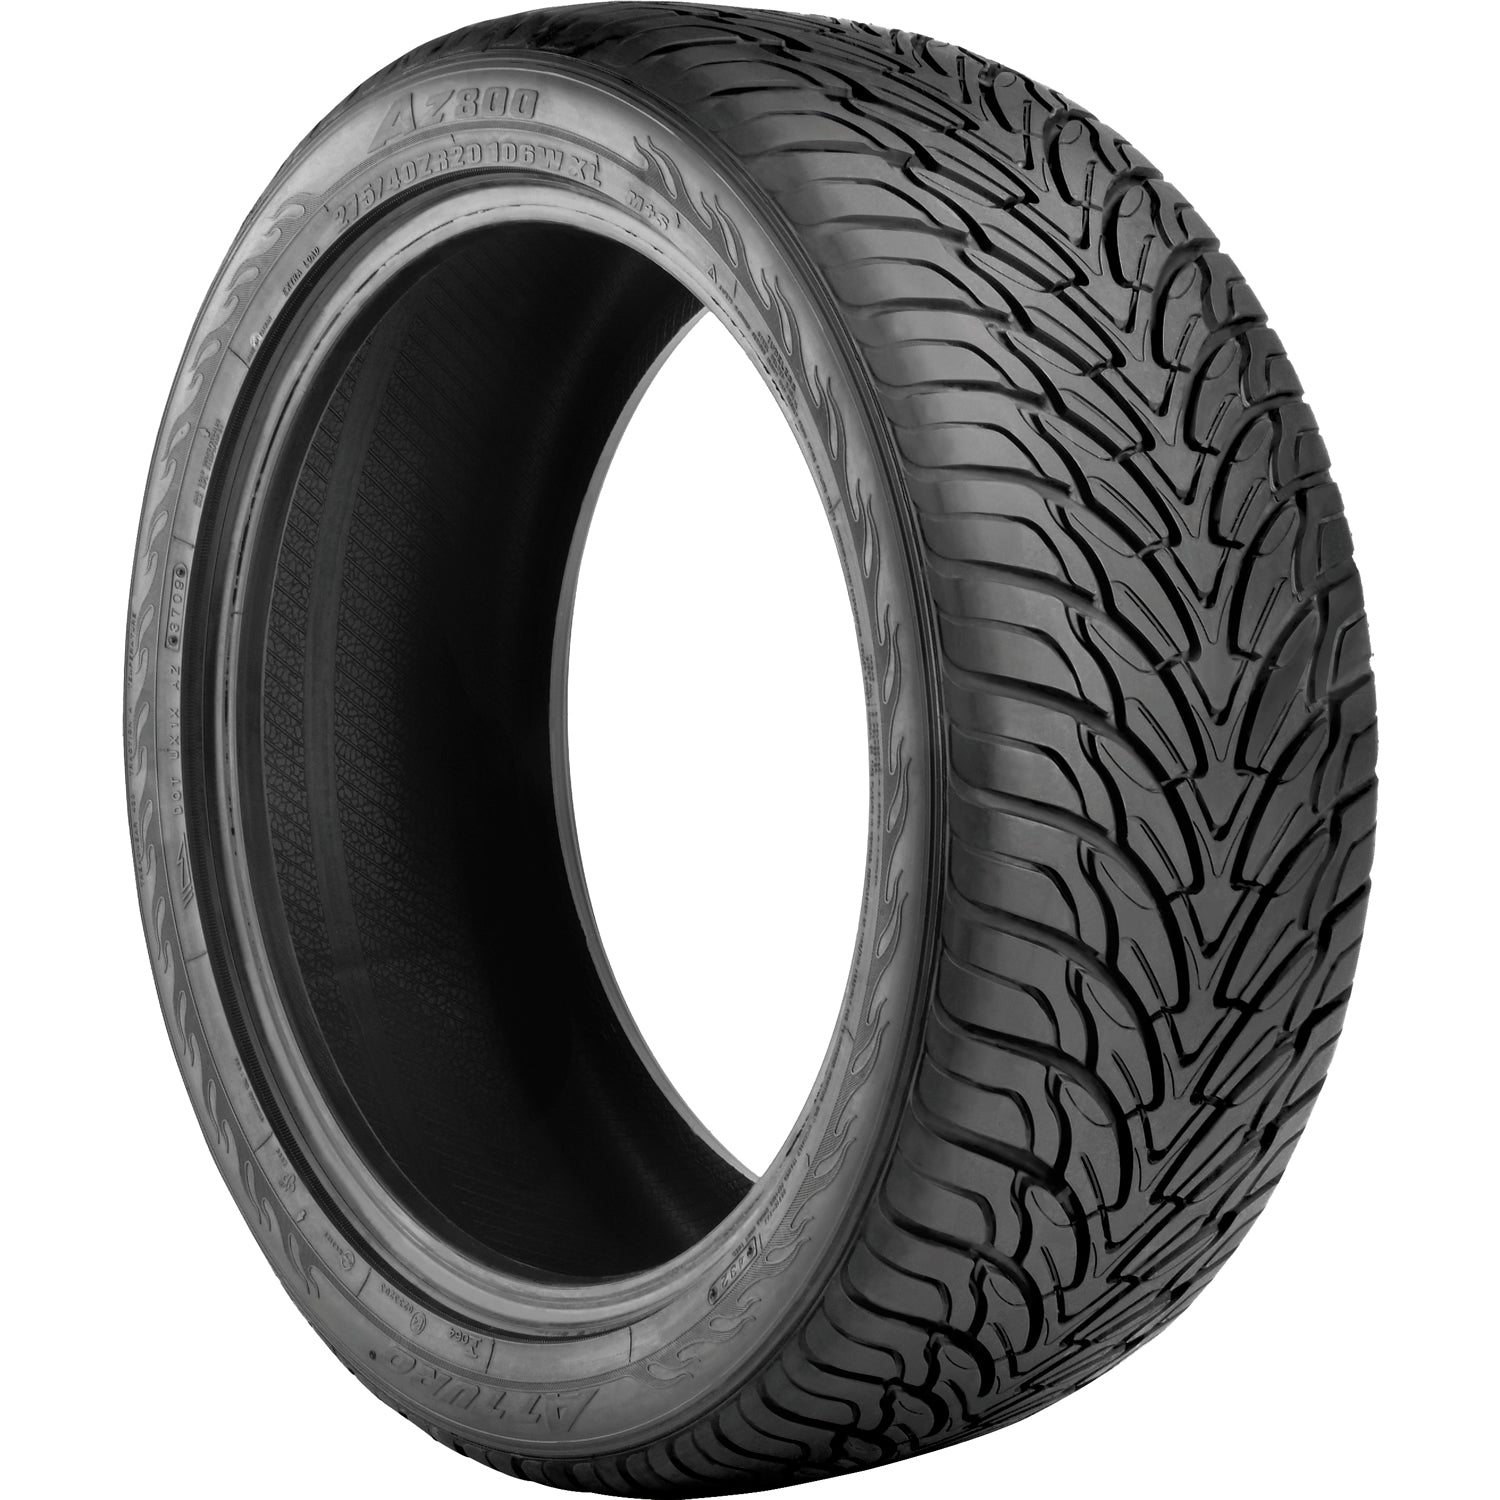 ATTURO AZ800 255/50R19 (29.1X10.4R 19) Tires